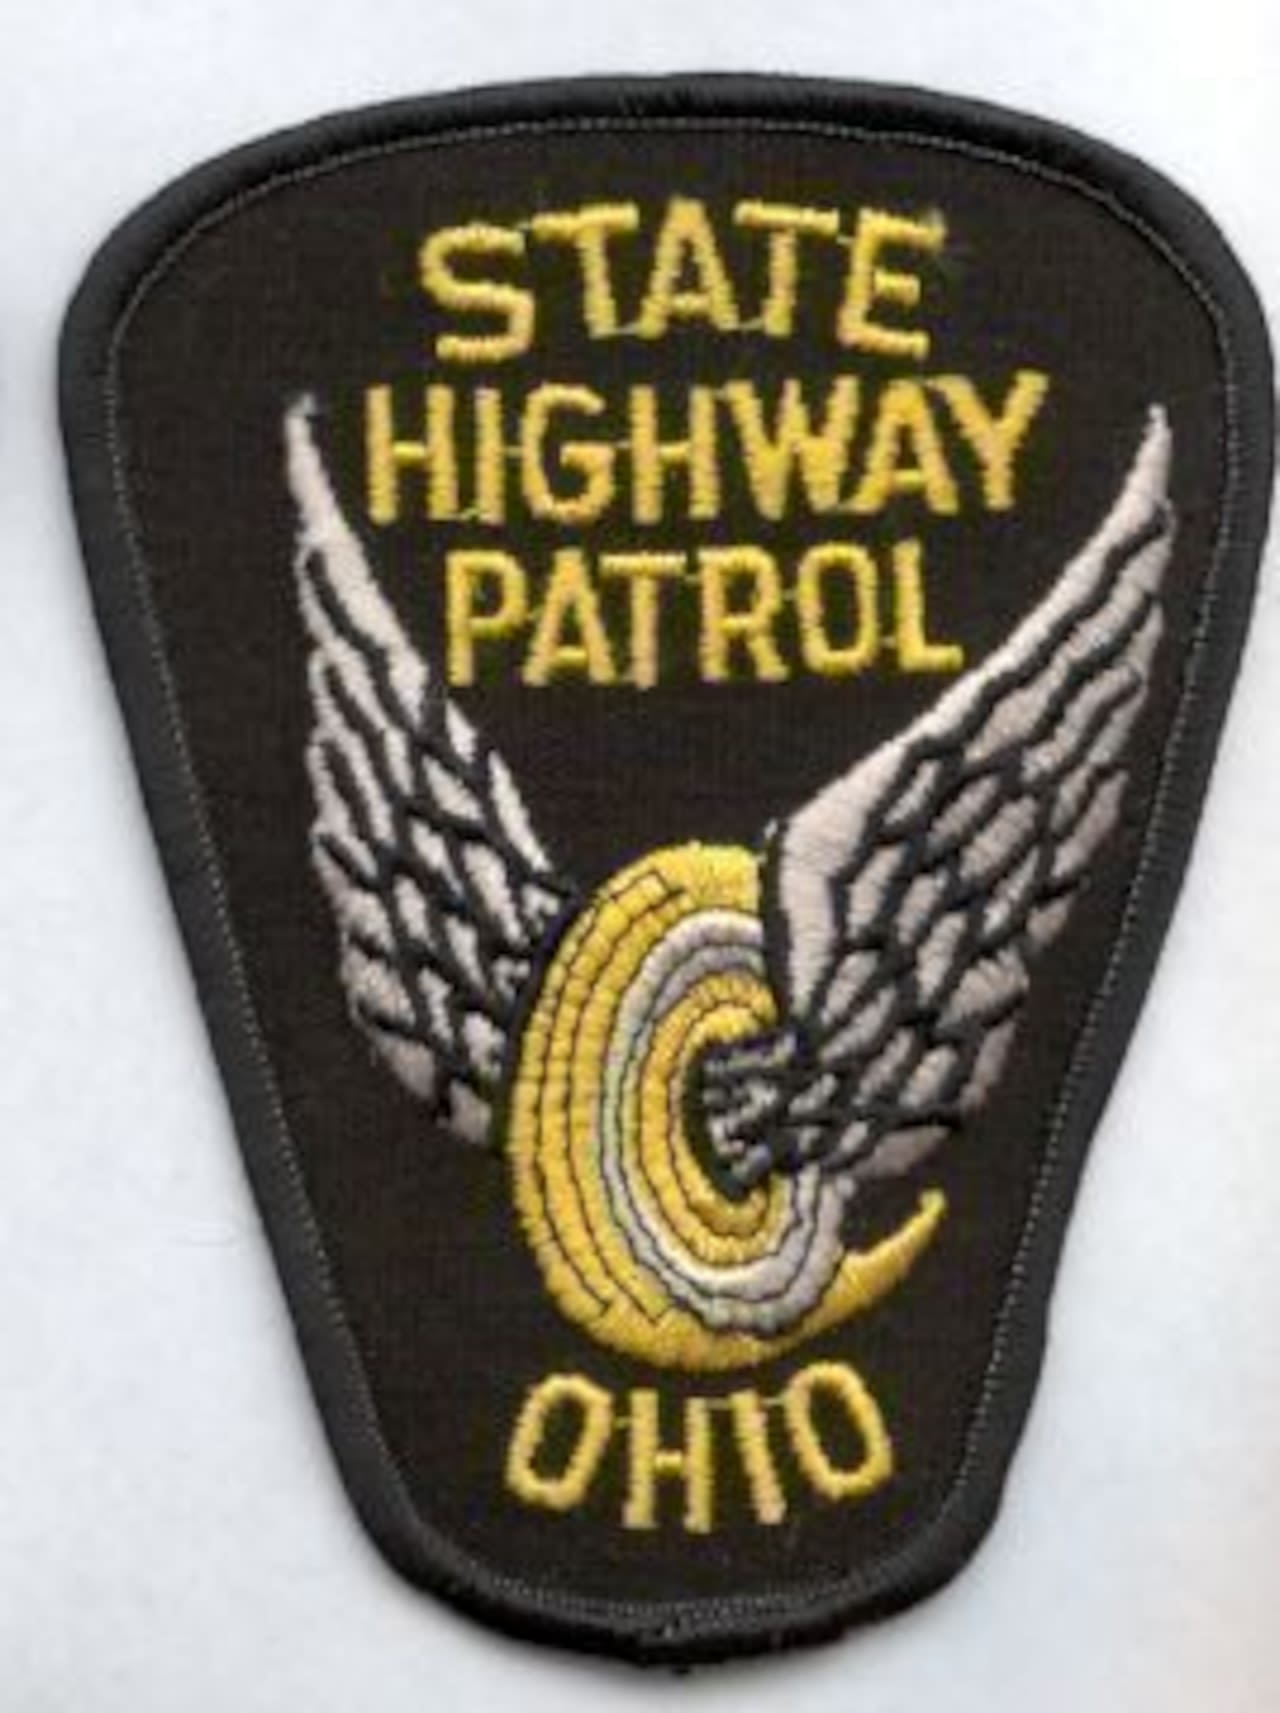 Multivehicle crash in Northern Ohio kills 2 adults, teen child